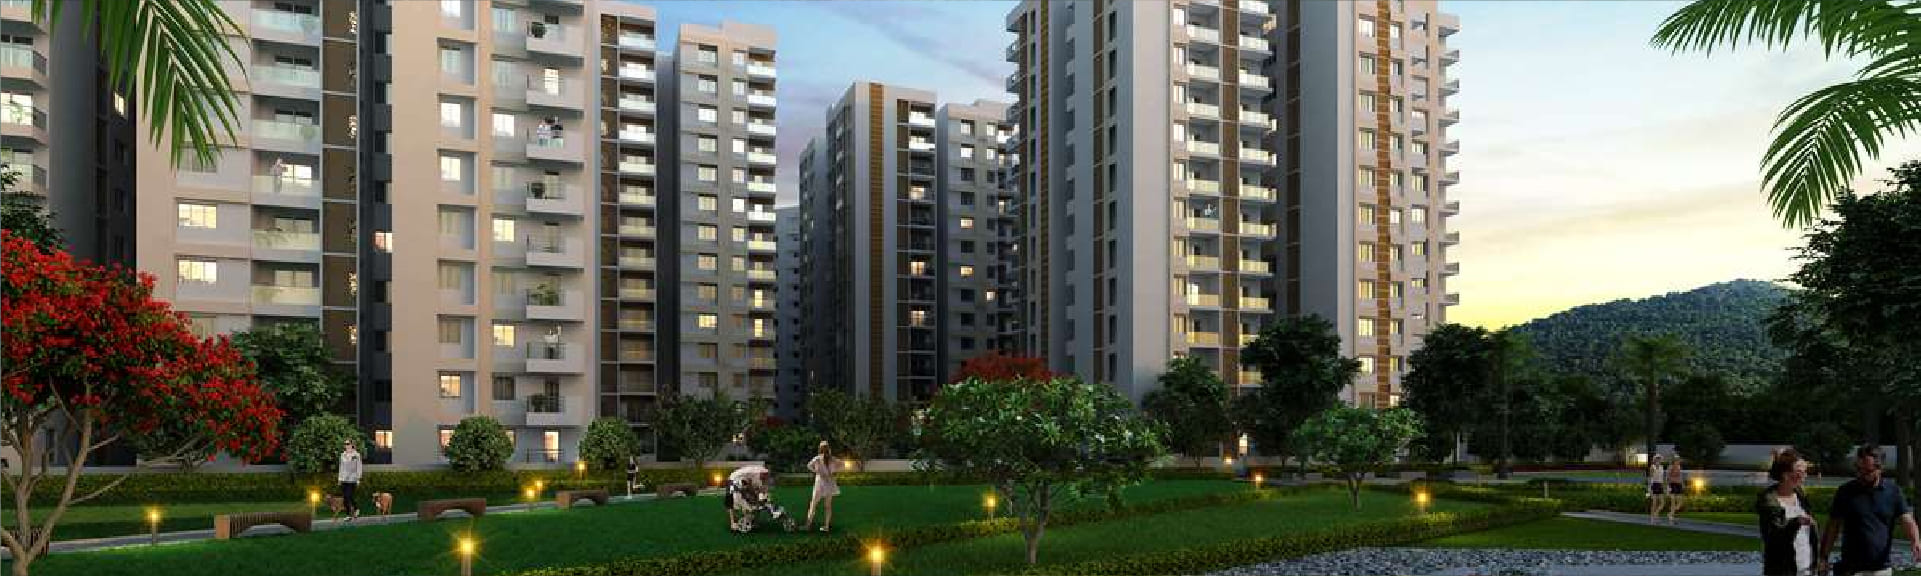 Shriram Park 63 – flats for sale in Perungulathur, Chennai